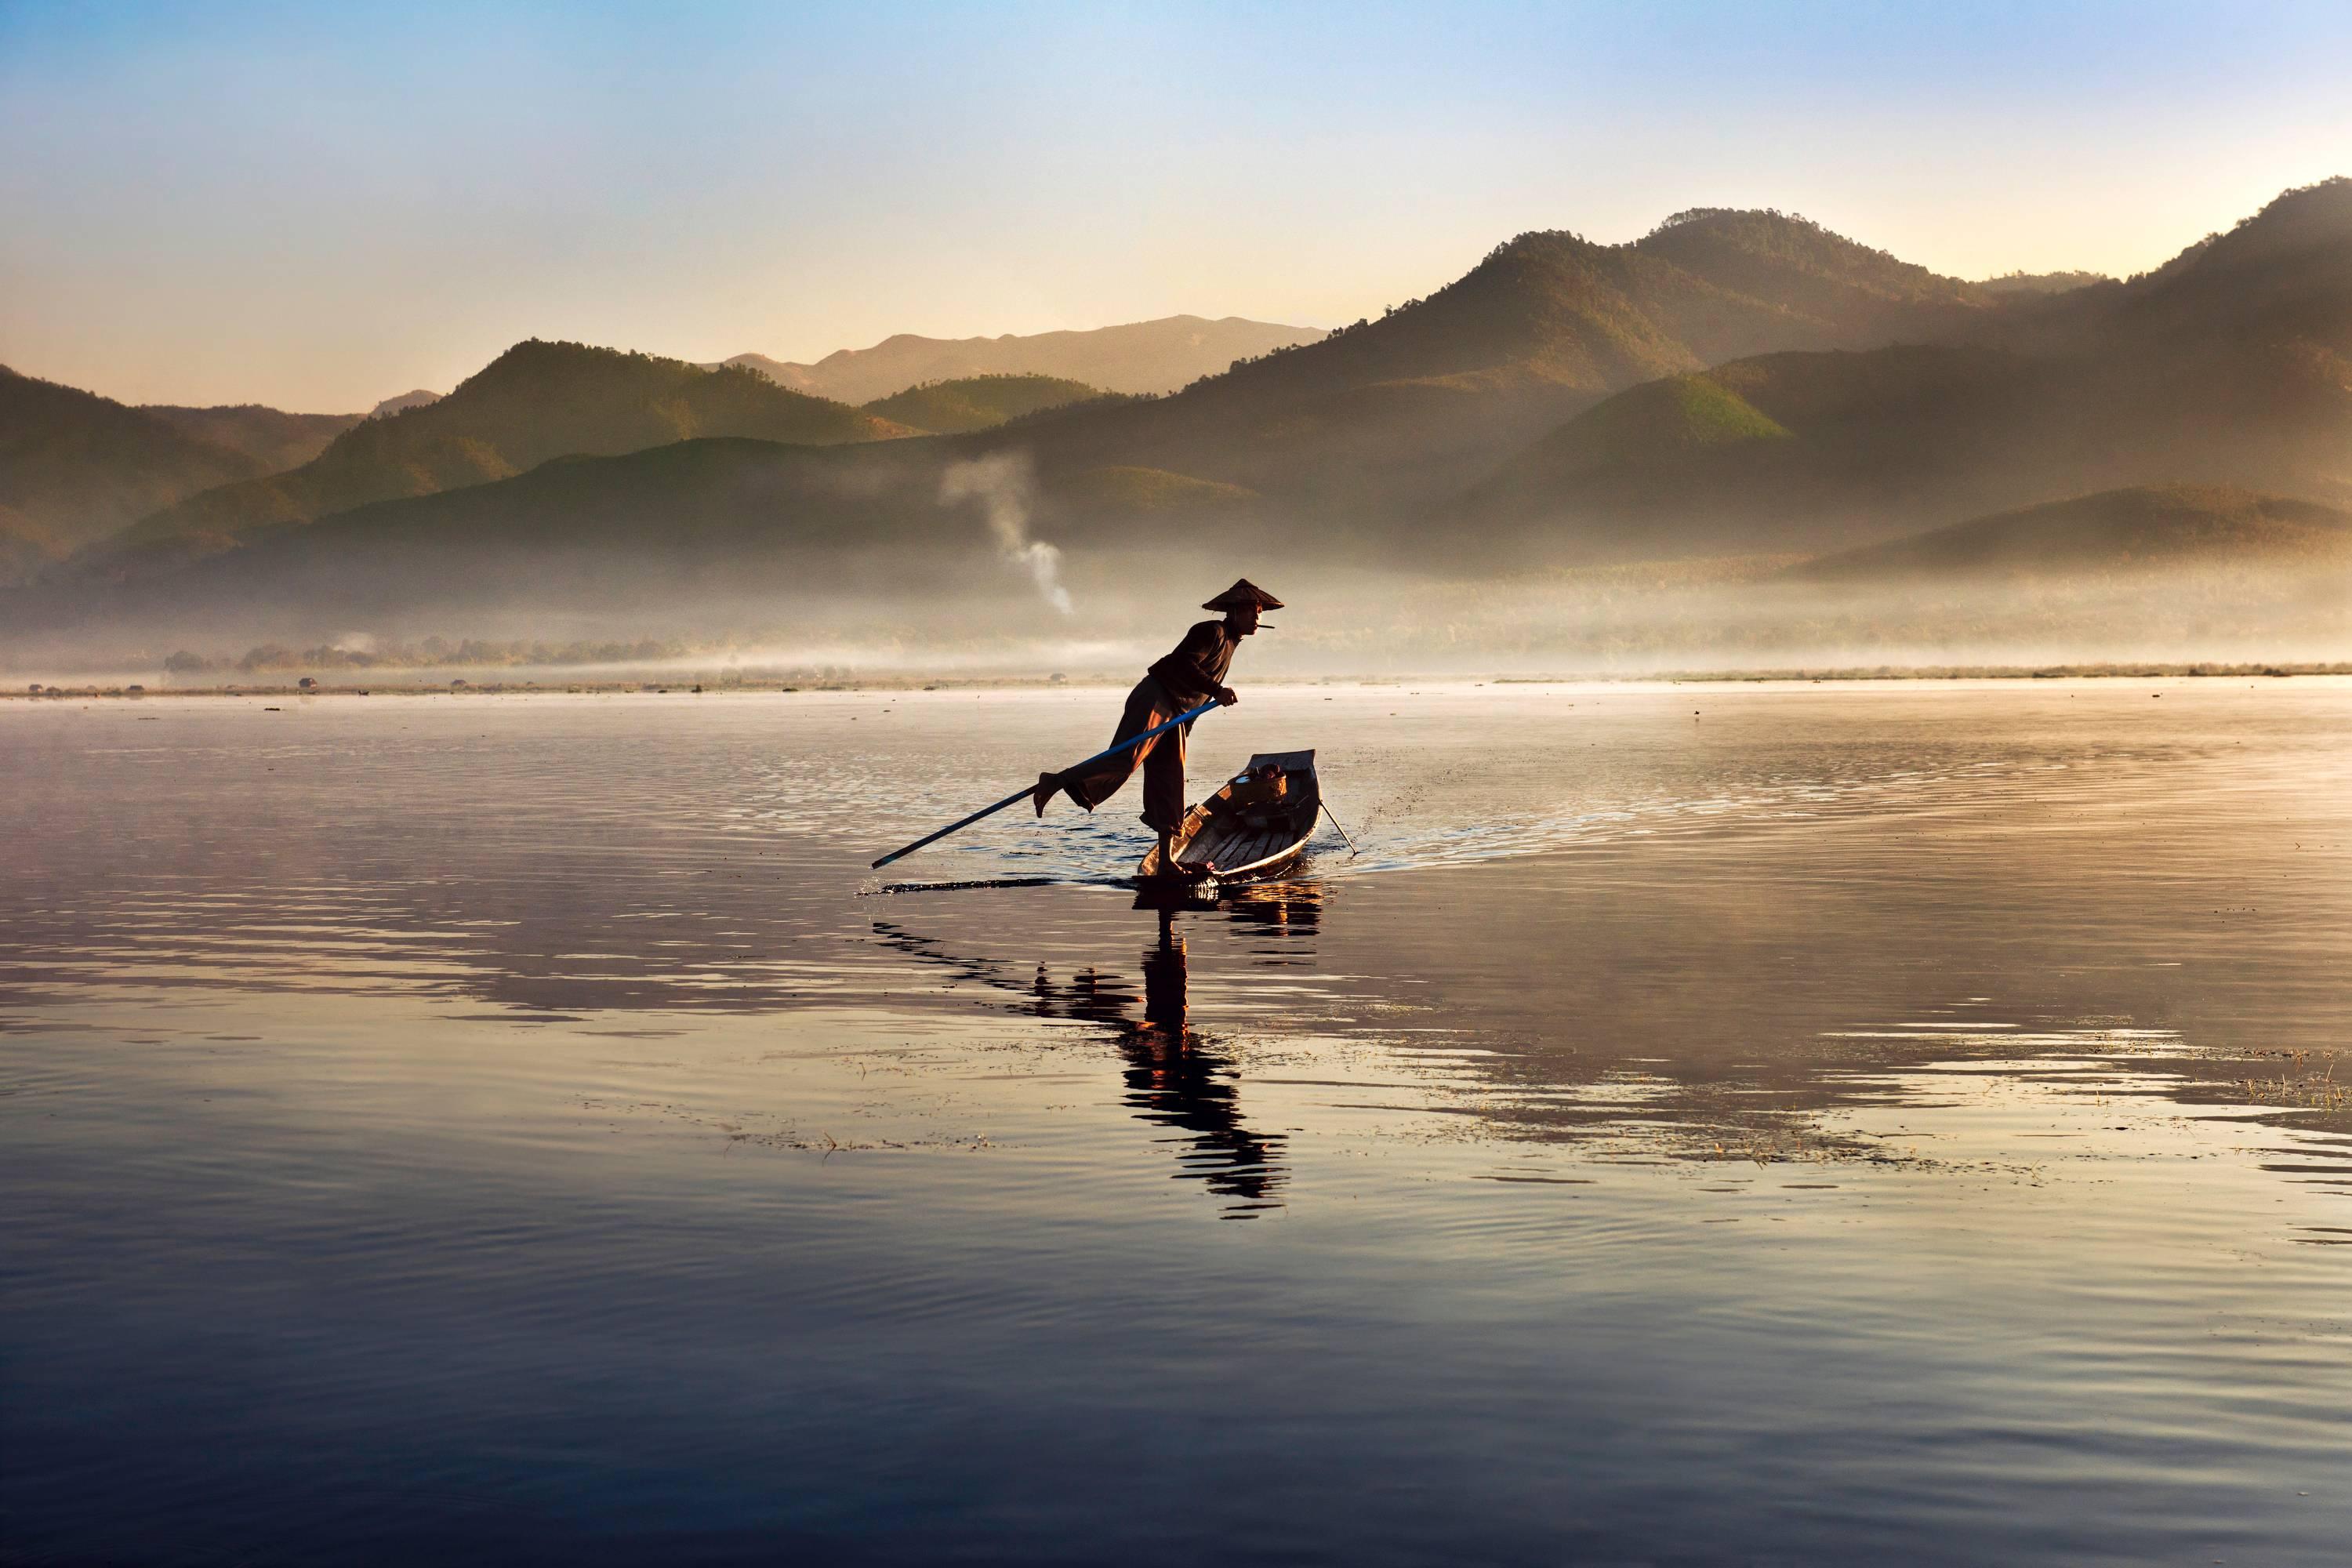 Intha Fisherman, Burma, 2011 - Steve McCurry (Colour Landscape Photography)